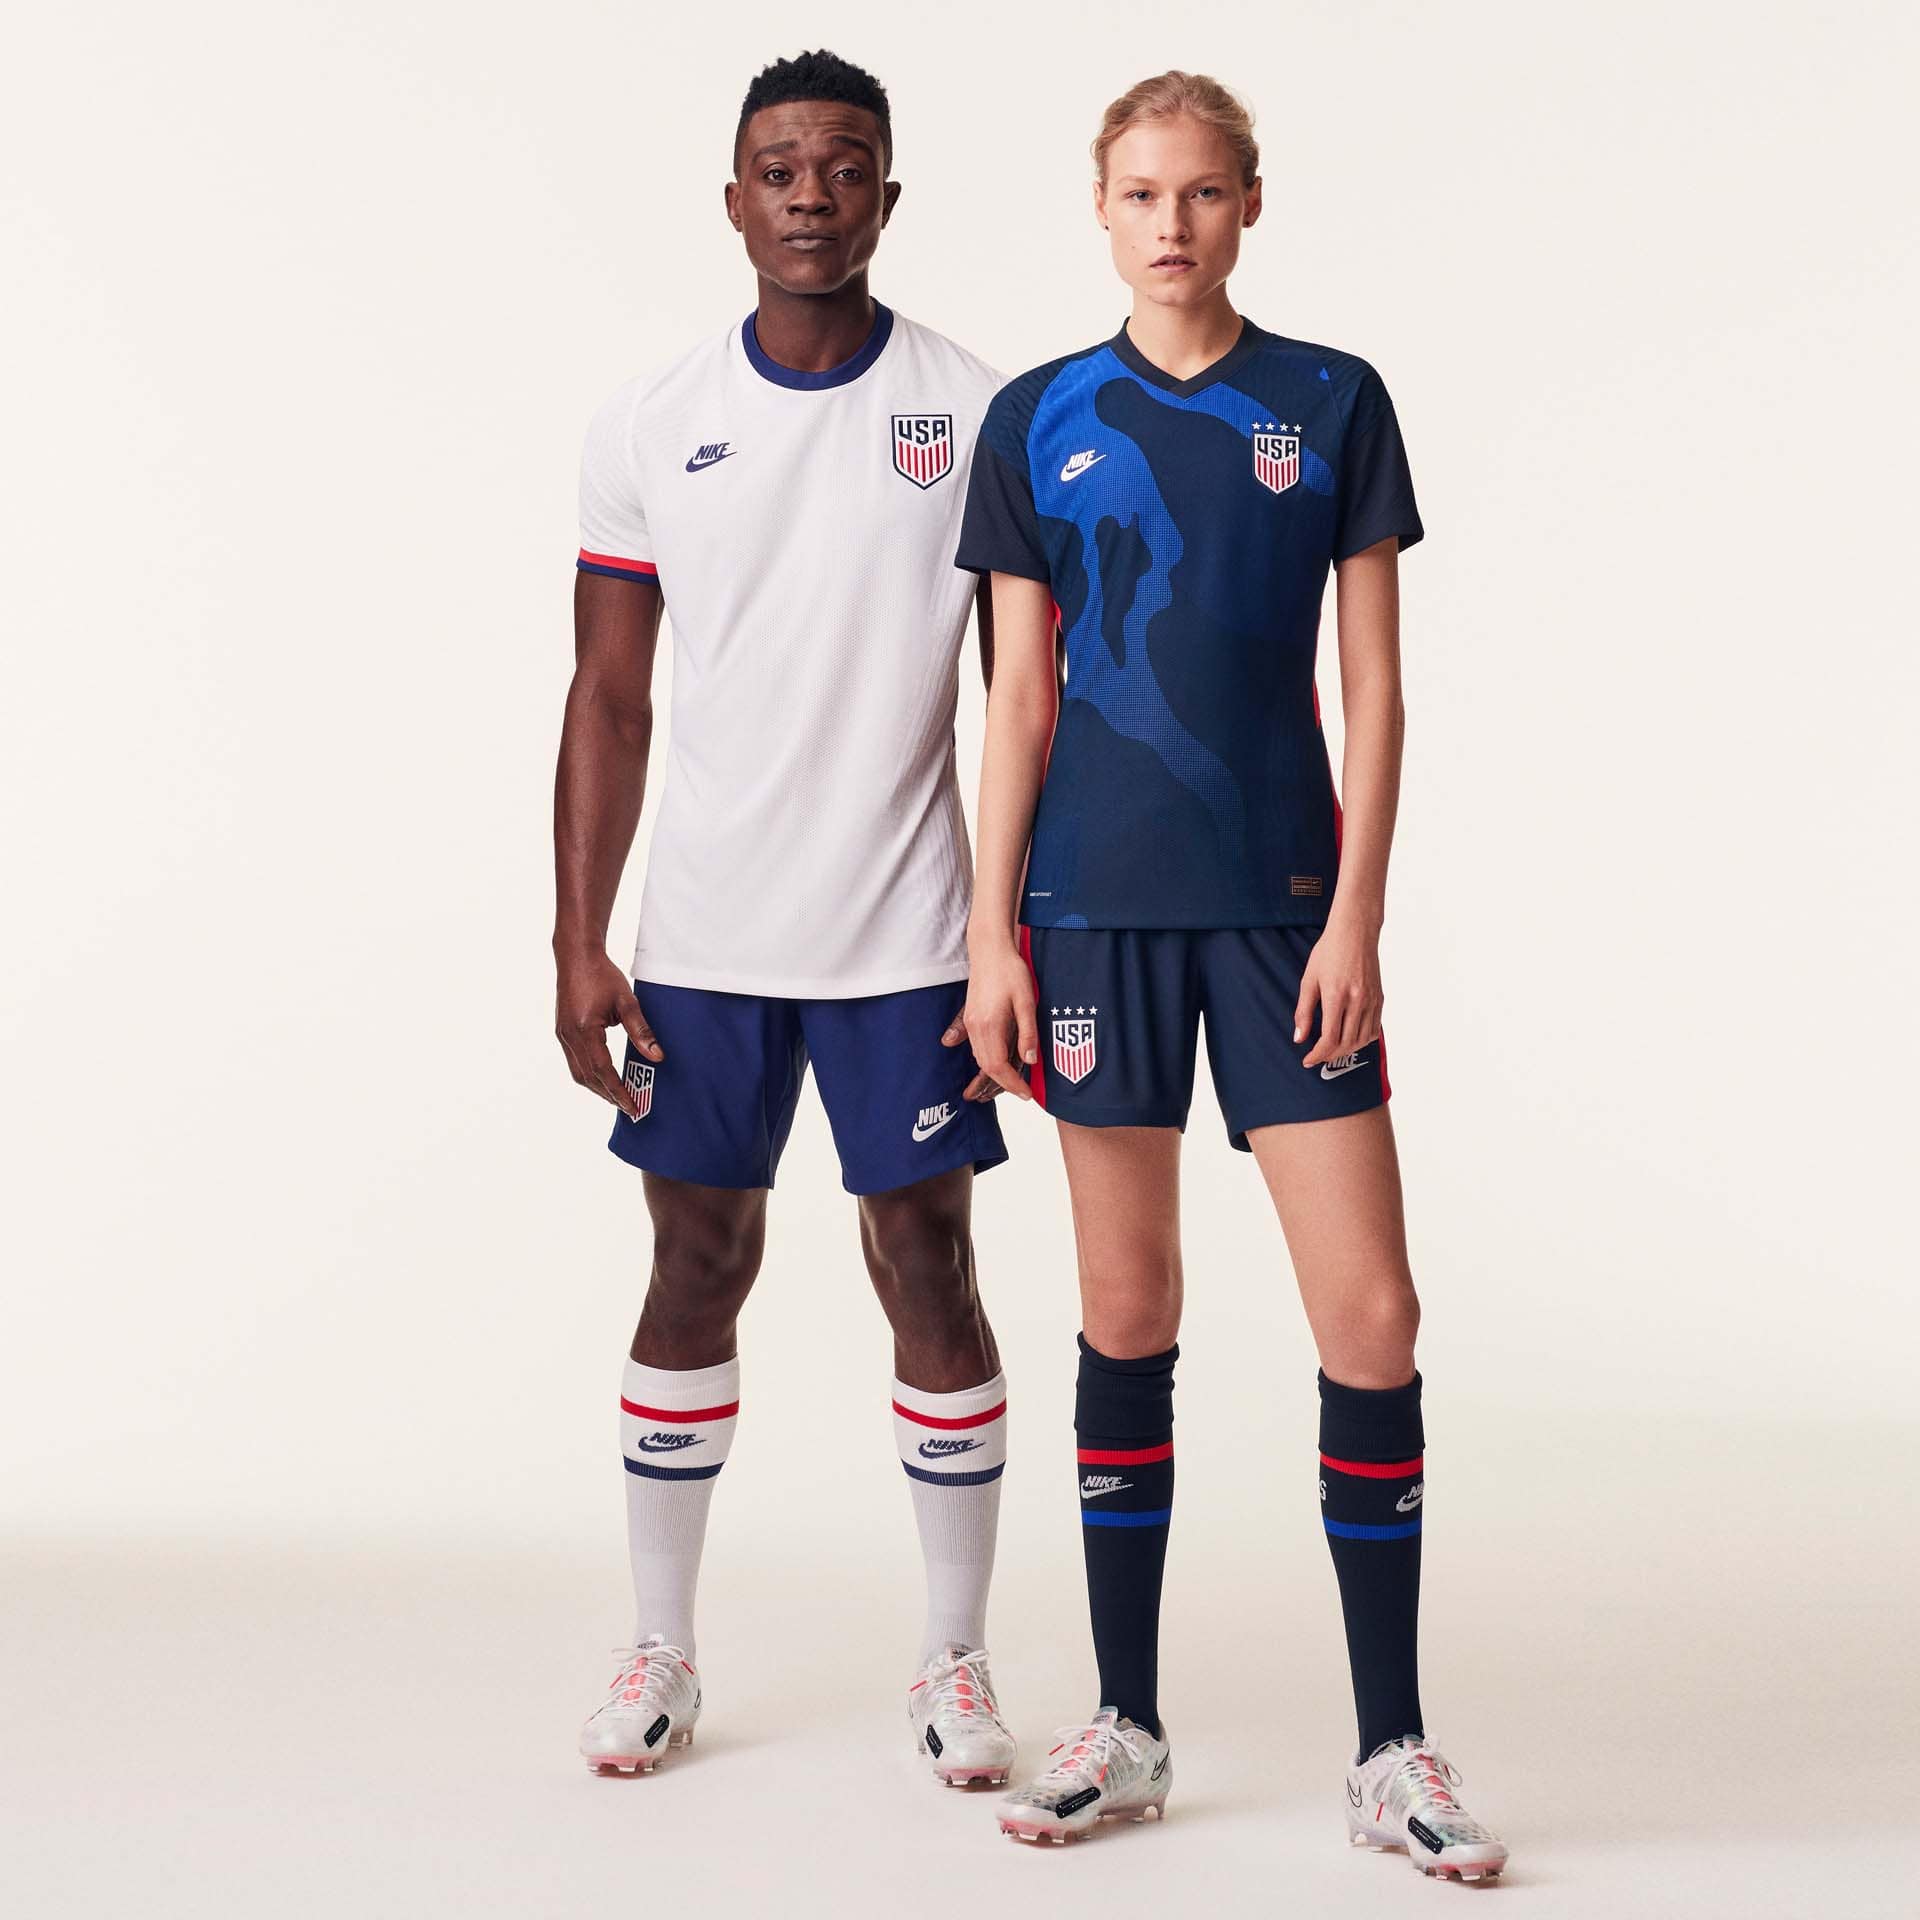 Todo Camisetas on Twitter: "🇺🇸 Por último, @nikefootball también reveló oficialmente los nuevos uniformes de Estados Unidos: https://t.co/xxGTDWJvb6 https://t.co/ppmjVJWtRS" / Twitter